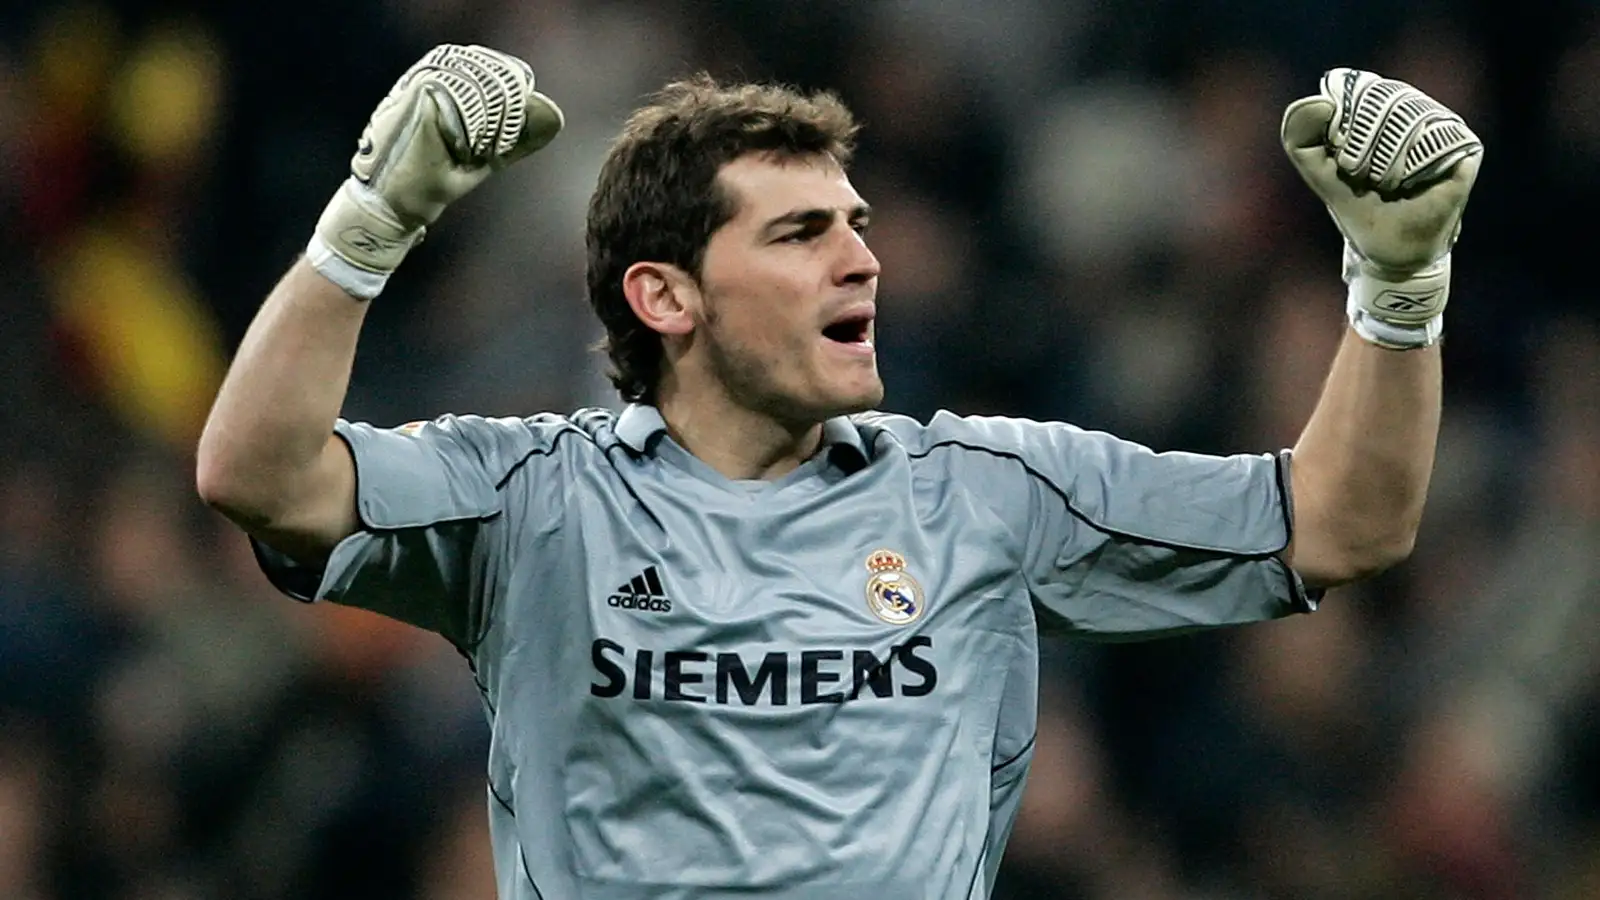 Watch: Reacting to Iker Casillas – football’s greatest goalkeeper